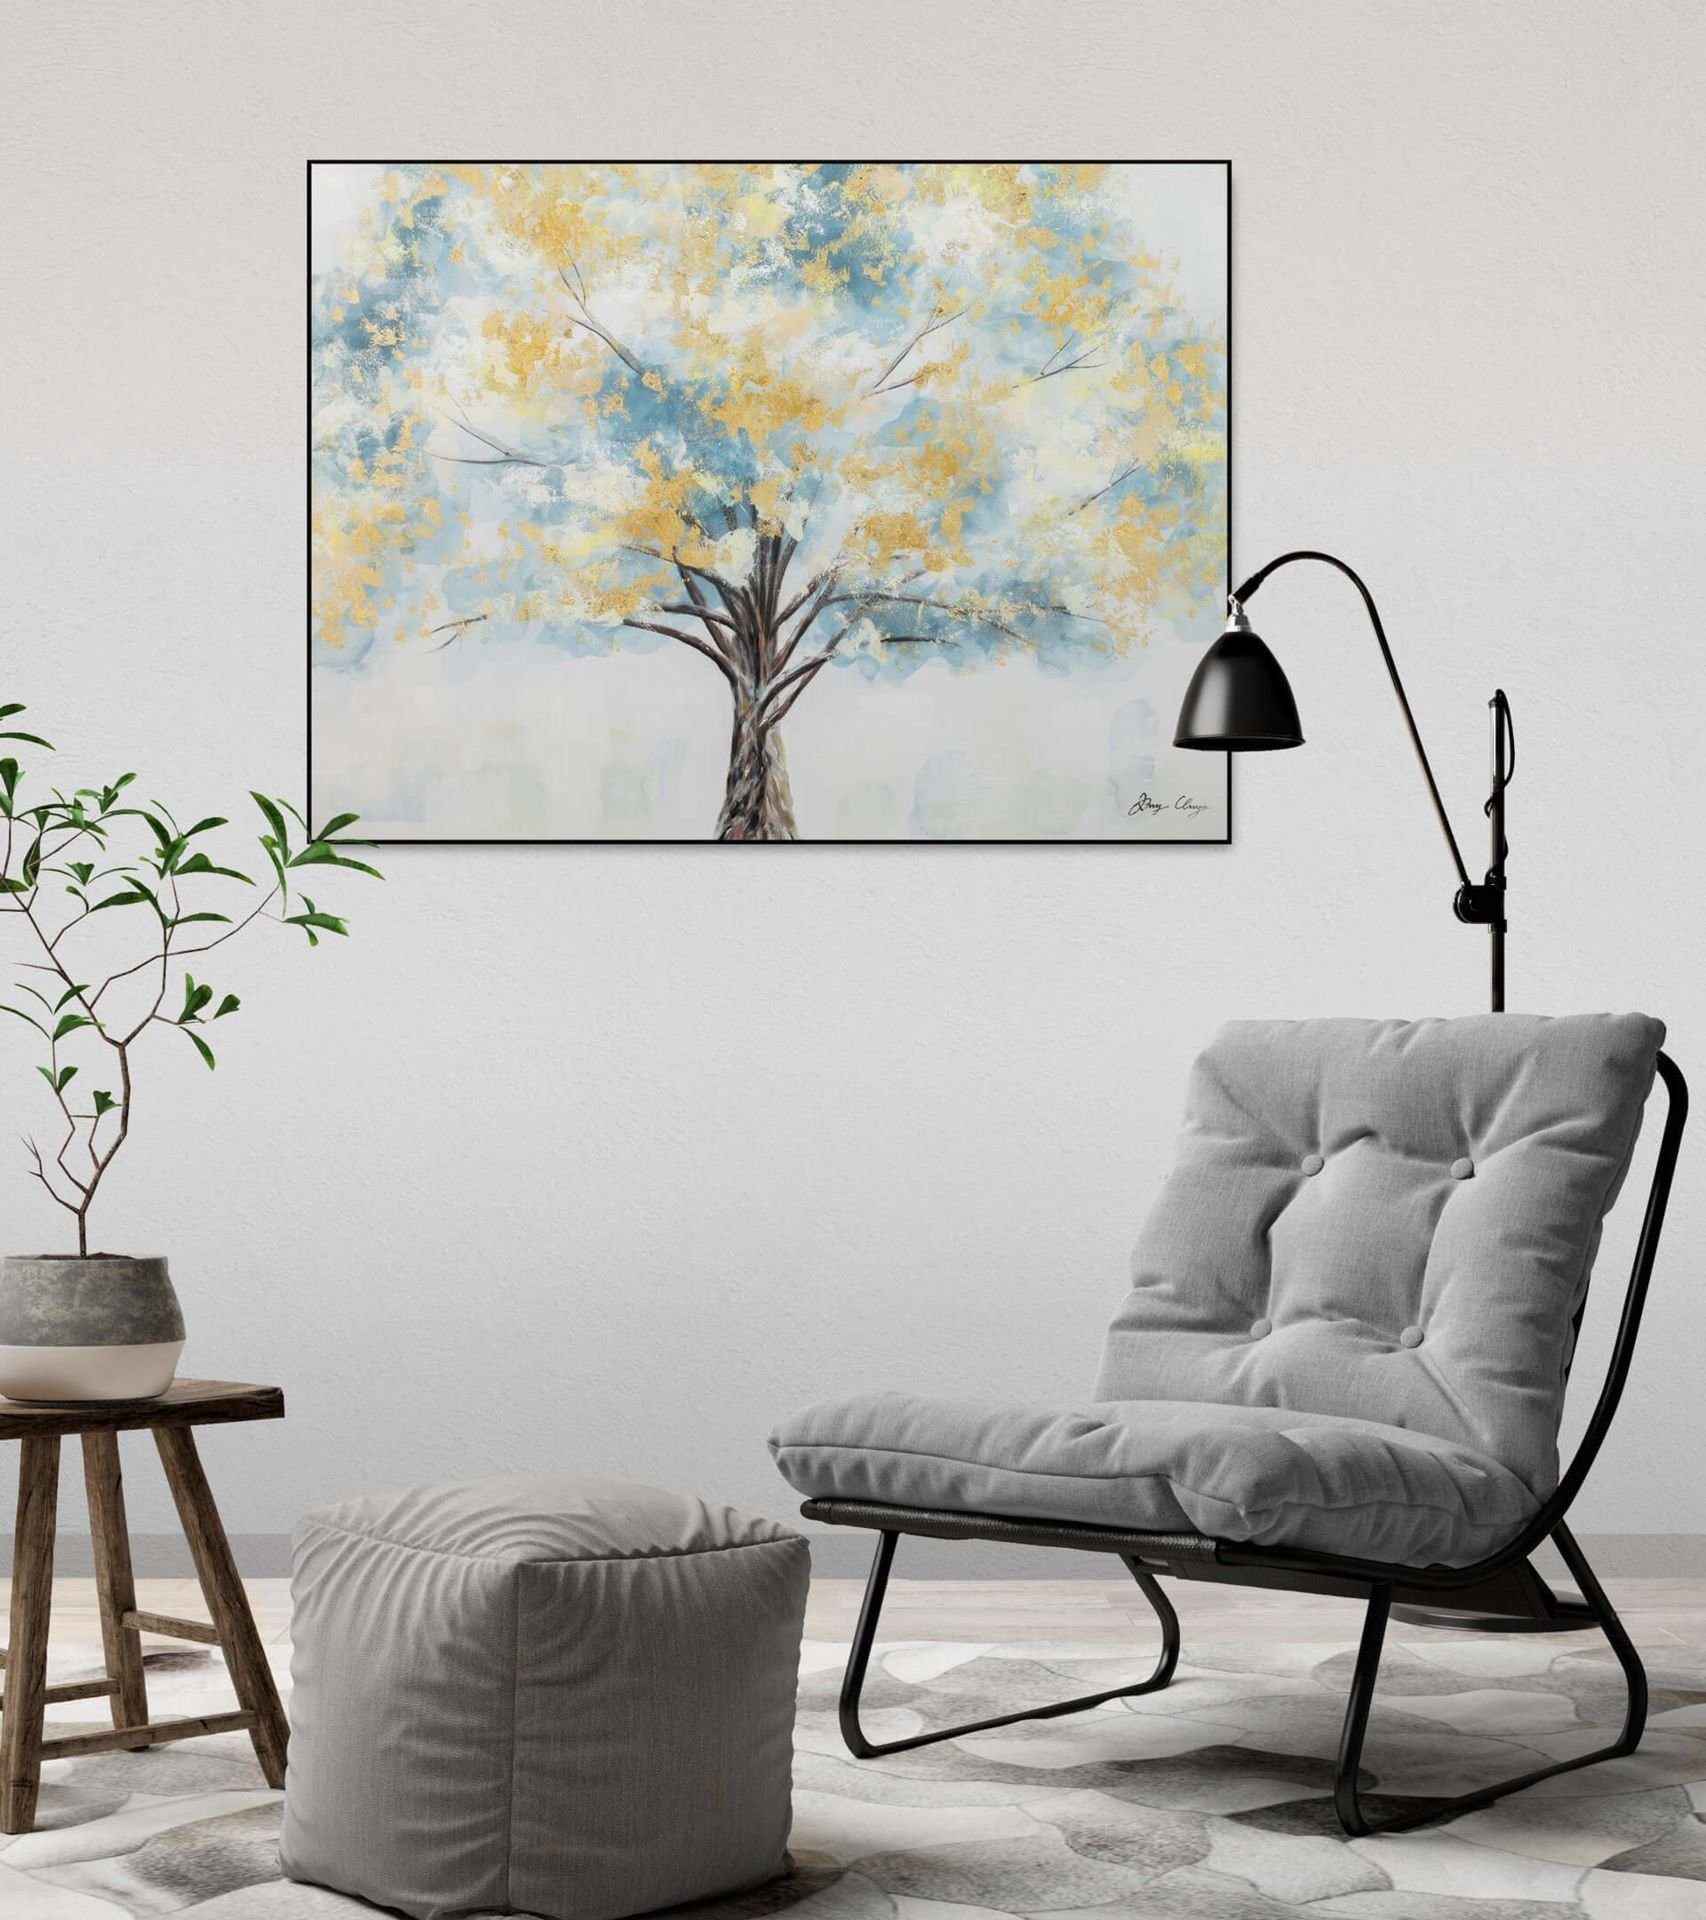 Leinwandbild Blooming HANDGEMALT Gemälde 100% Wohnzimmer Wandbild KUNSTLOFT 100x75 Giant cm,